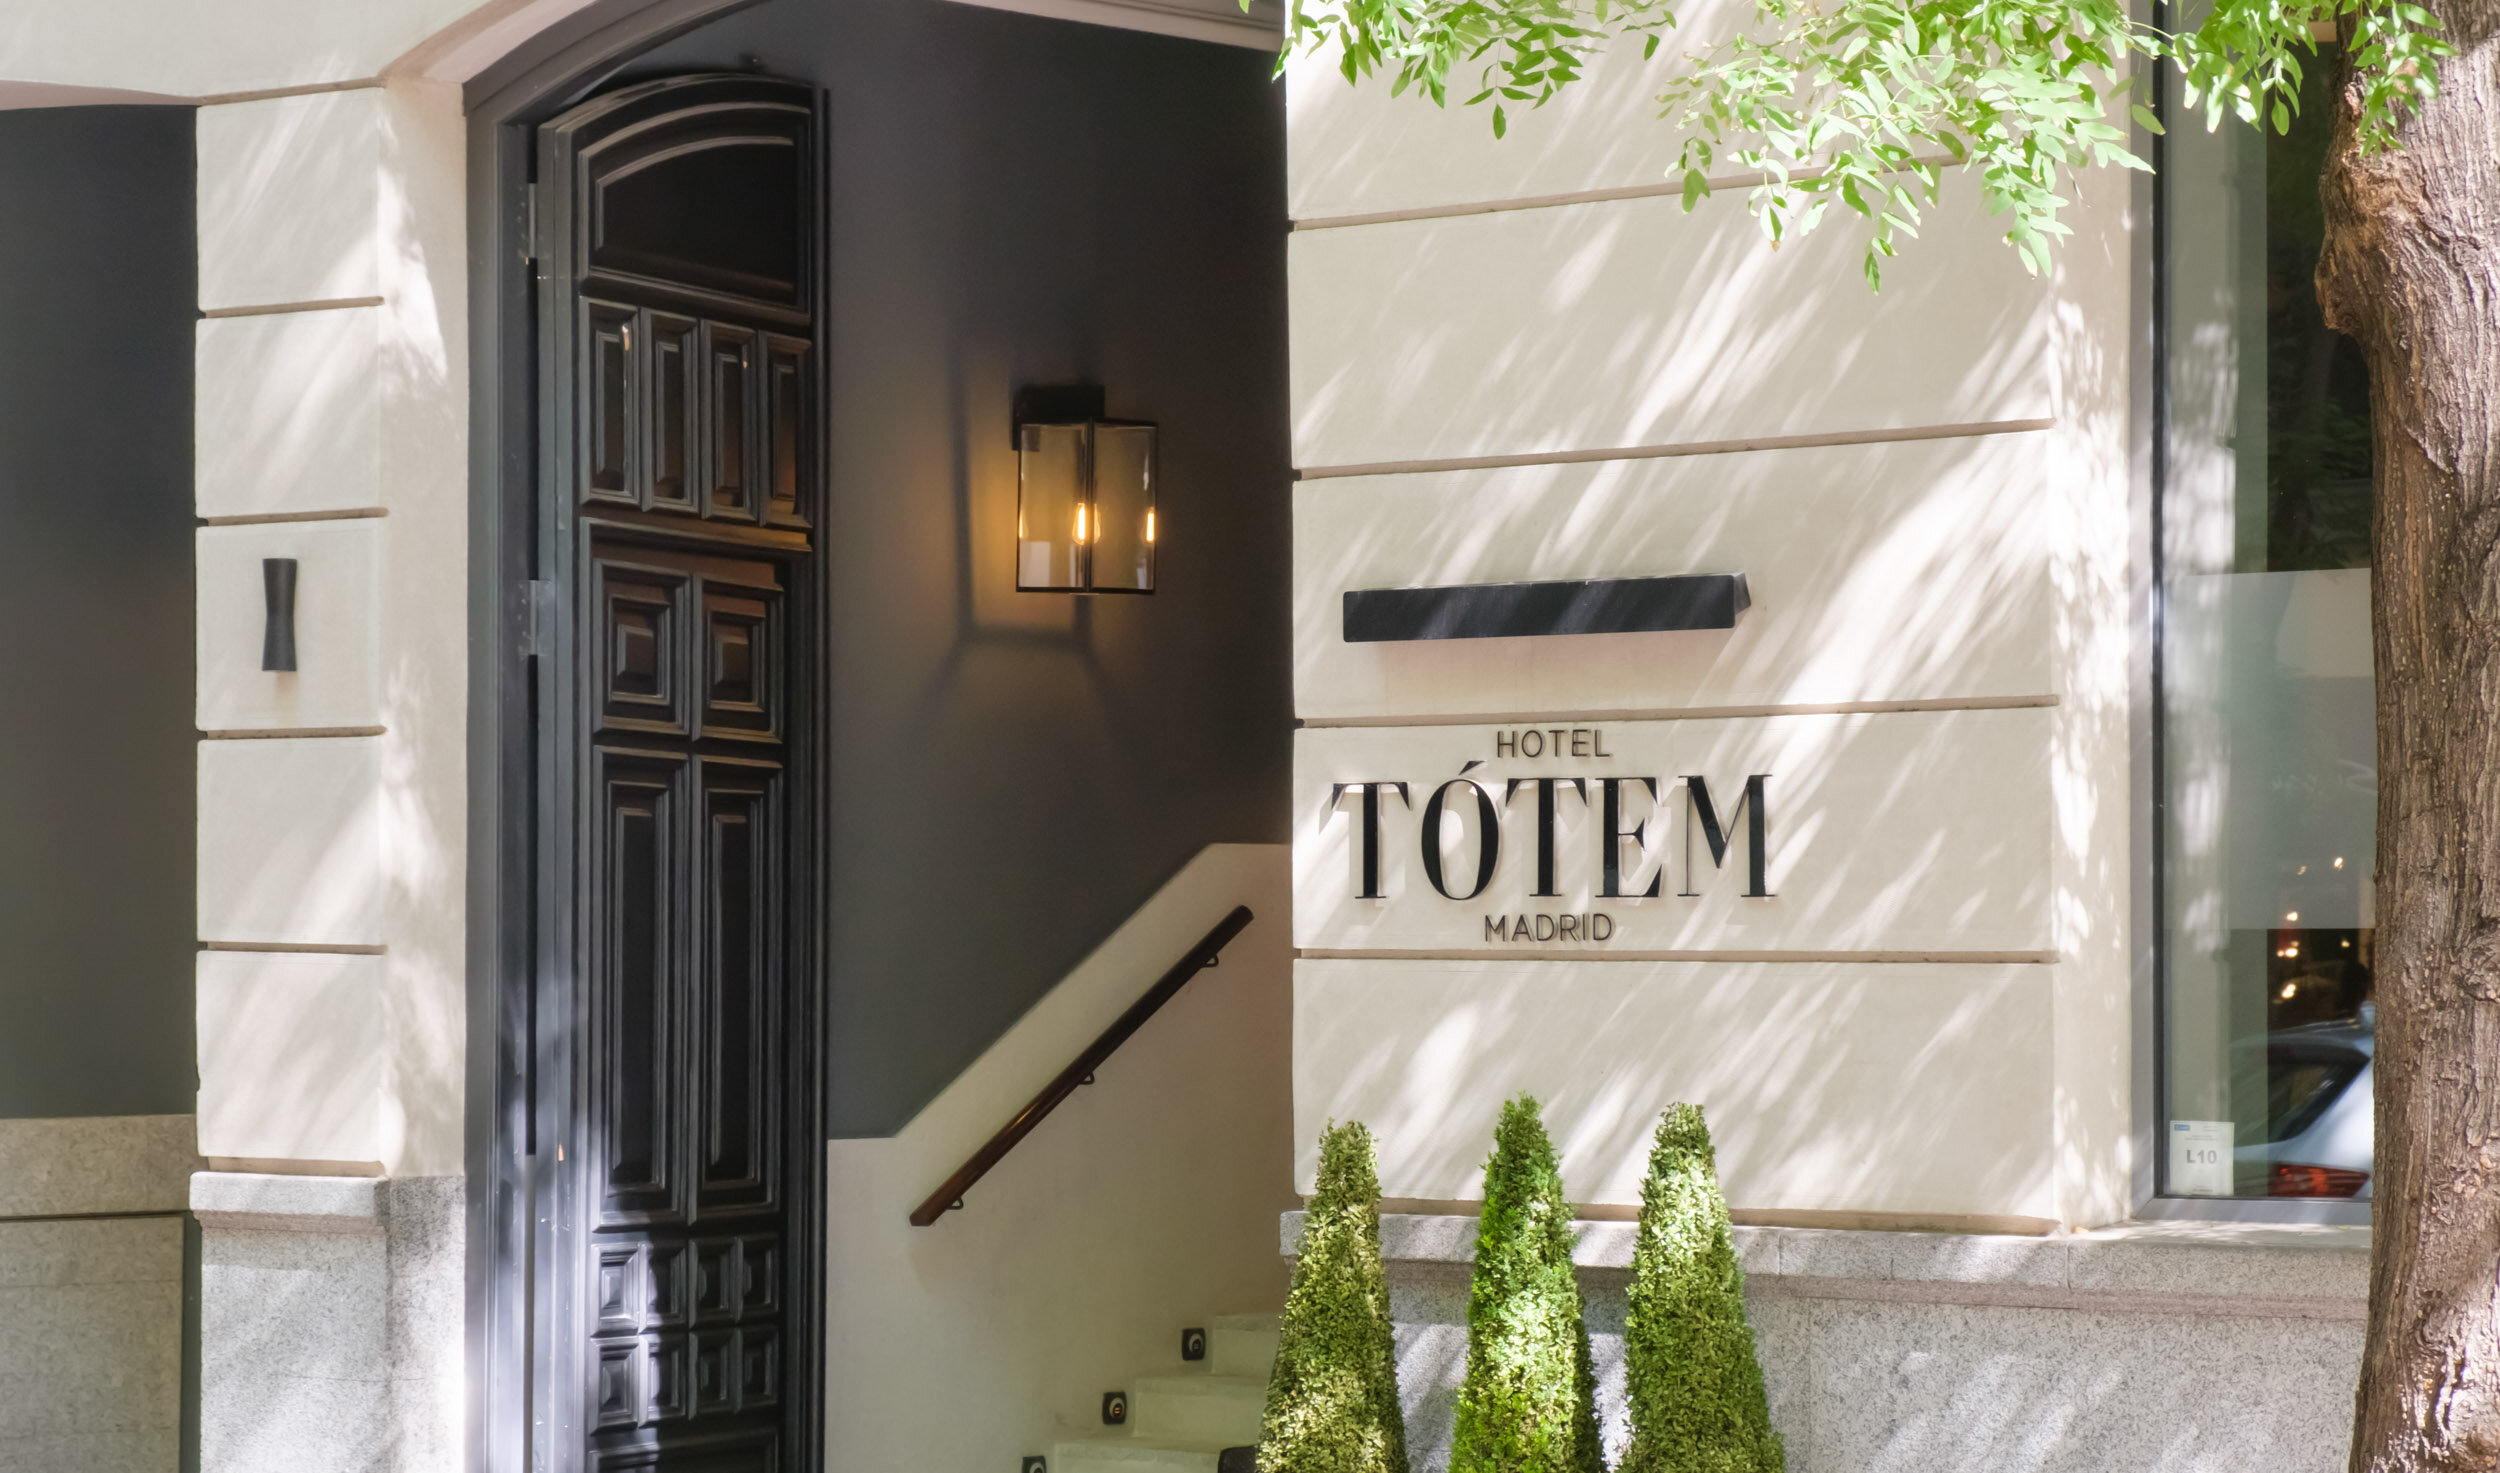 Hotel Totem-spain-Arturo-Lauren-art-sanchez-architecture-interior-photographer-9.jpg